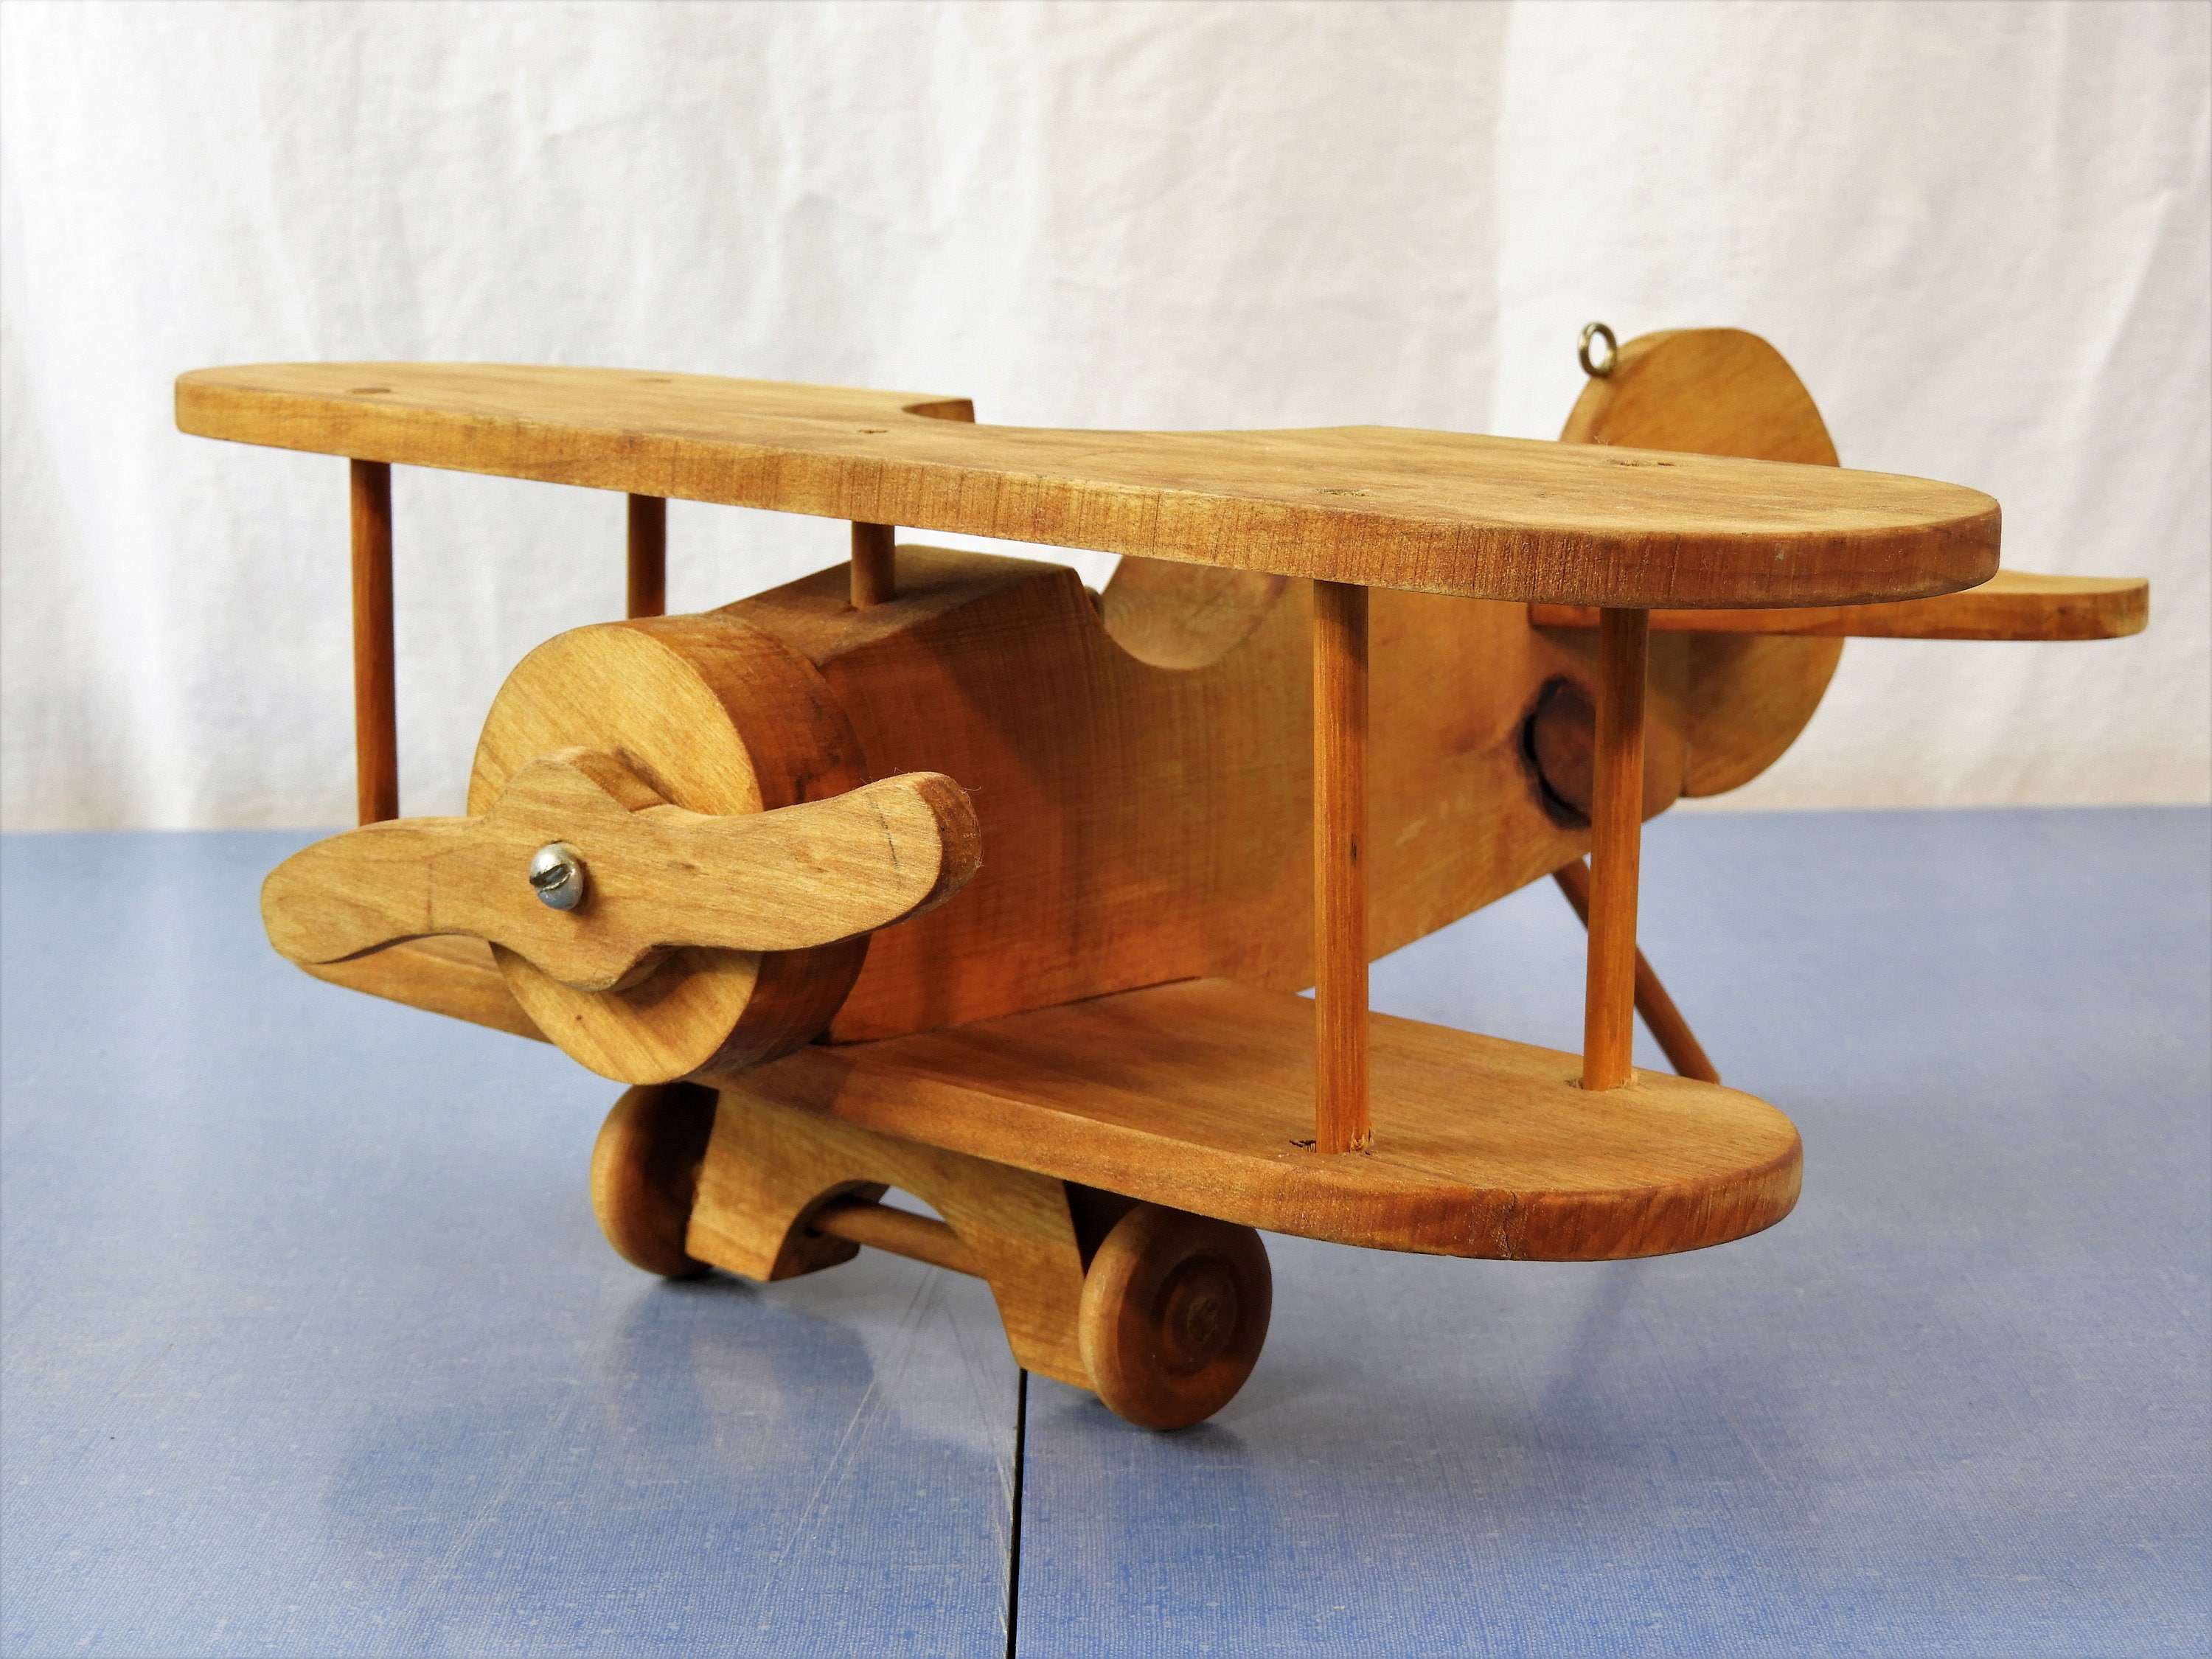 Vintage Wooden Plane, Brown Biplane, Wood Toy, Childrens Room Decor